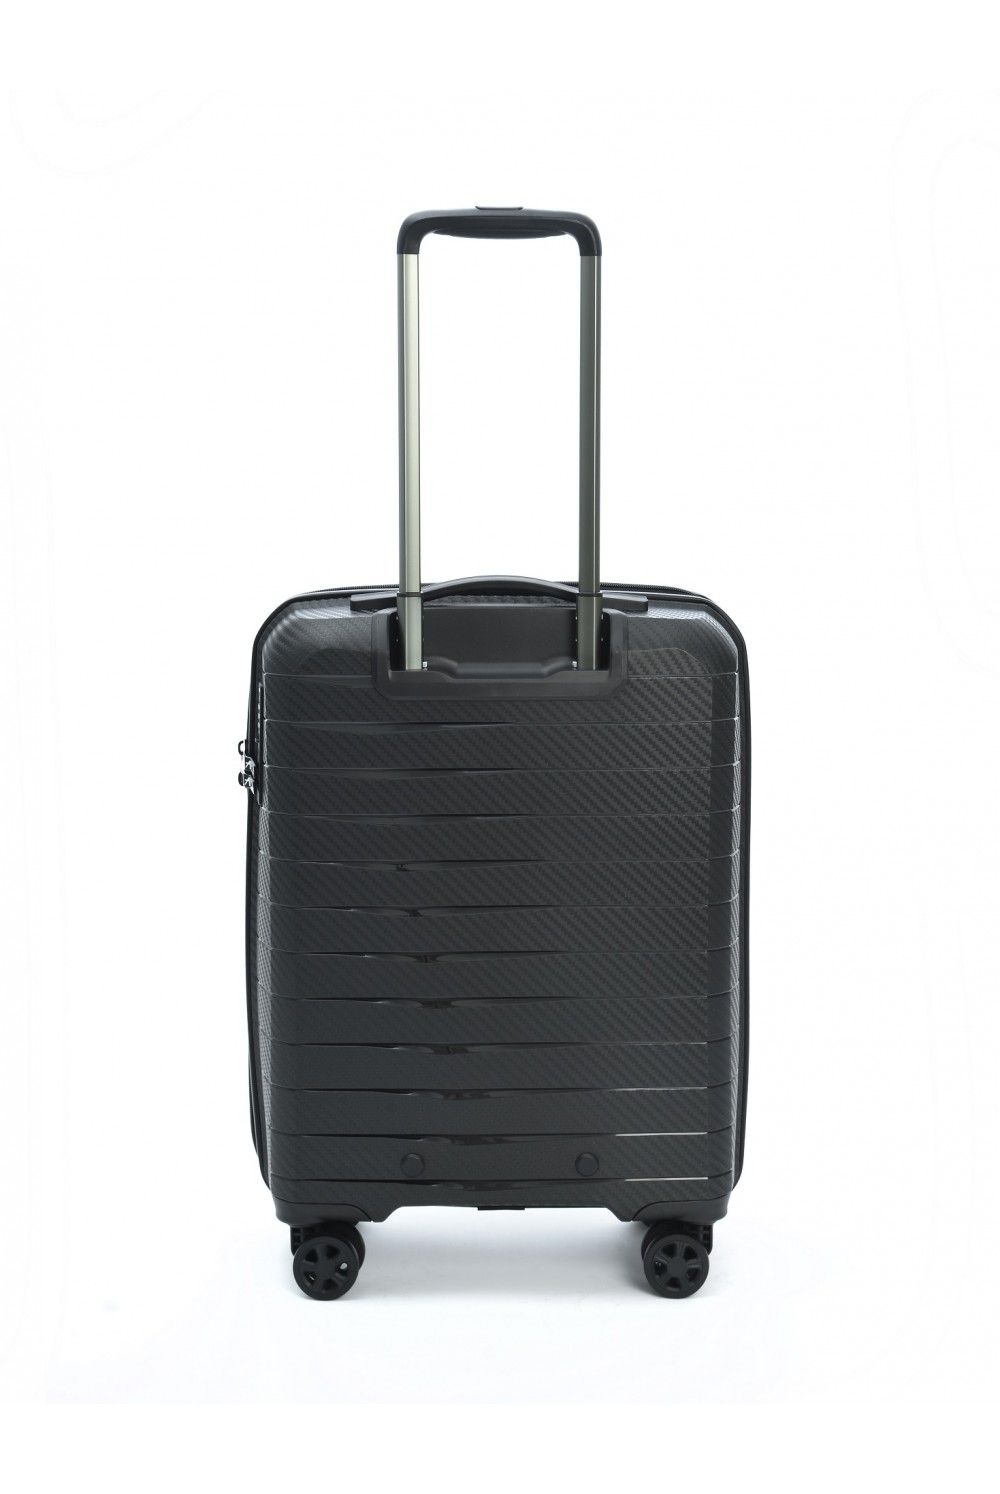 Hand luggage suitcase AIRBOX AZ18 55cm 4 wheels black